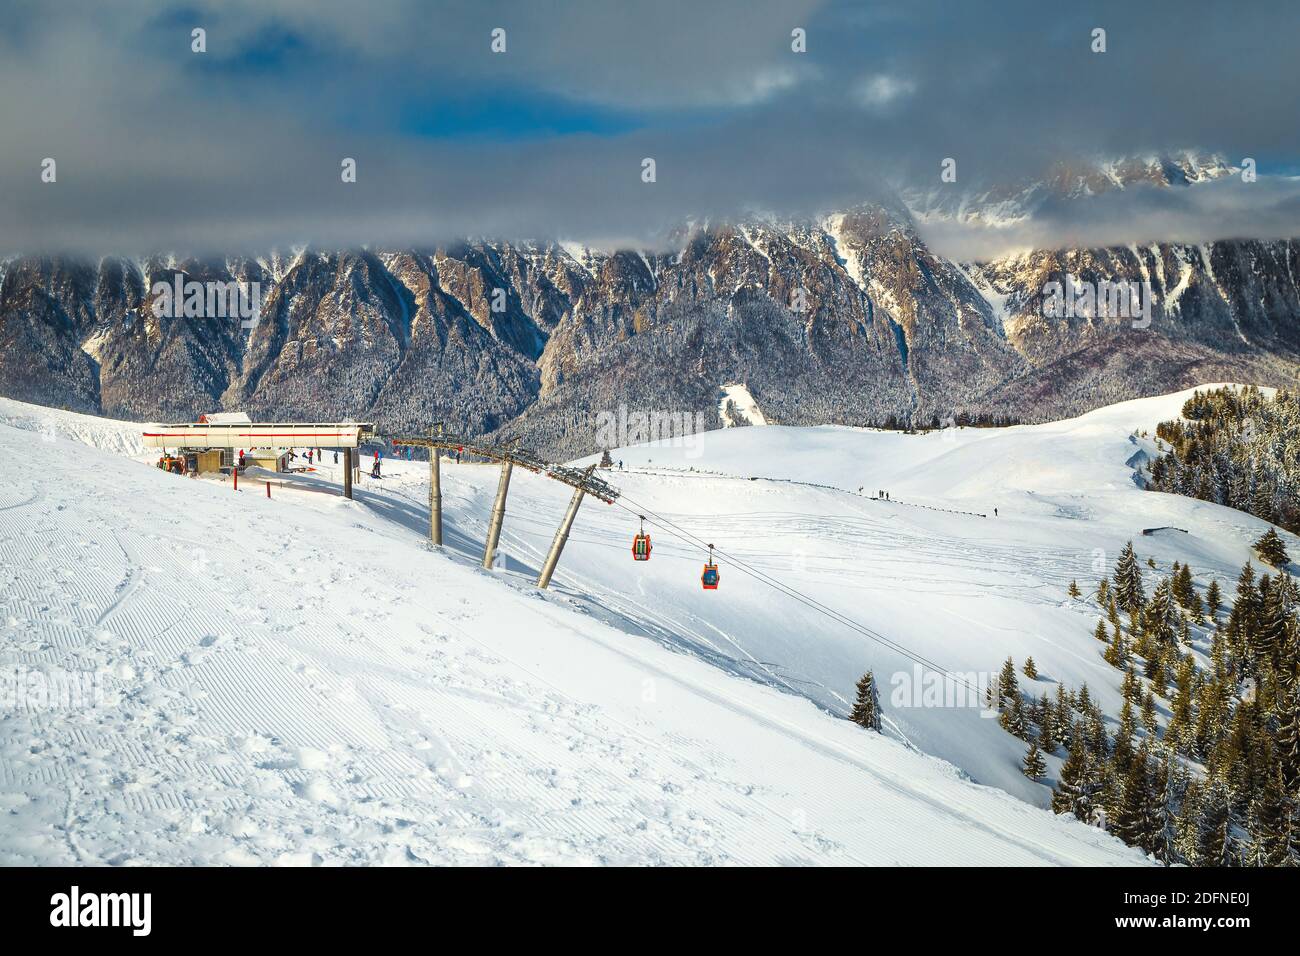 Amazing winter recreation destination, breathtaking alpine scenery with mountains, snowy forest and fantastic ski resort in Prahova valley, Azuga, Rom Stock Photo